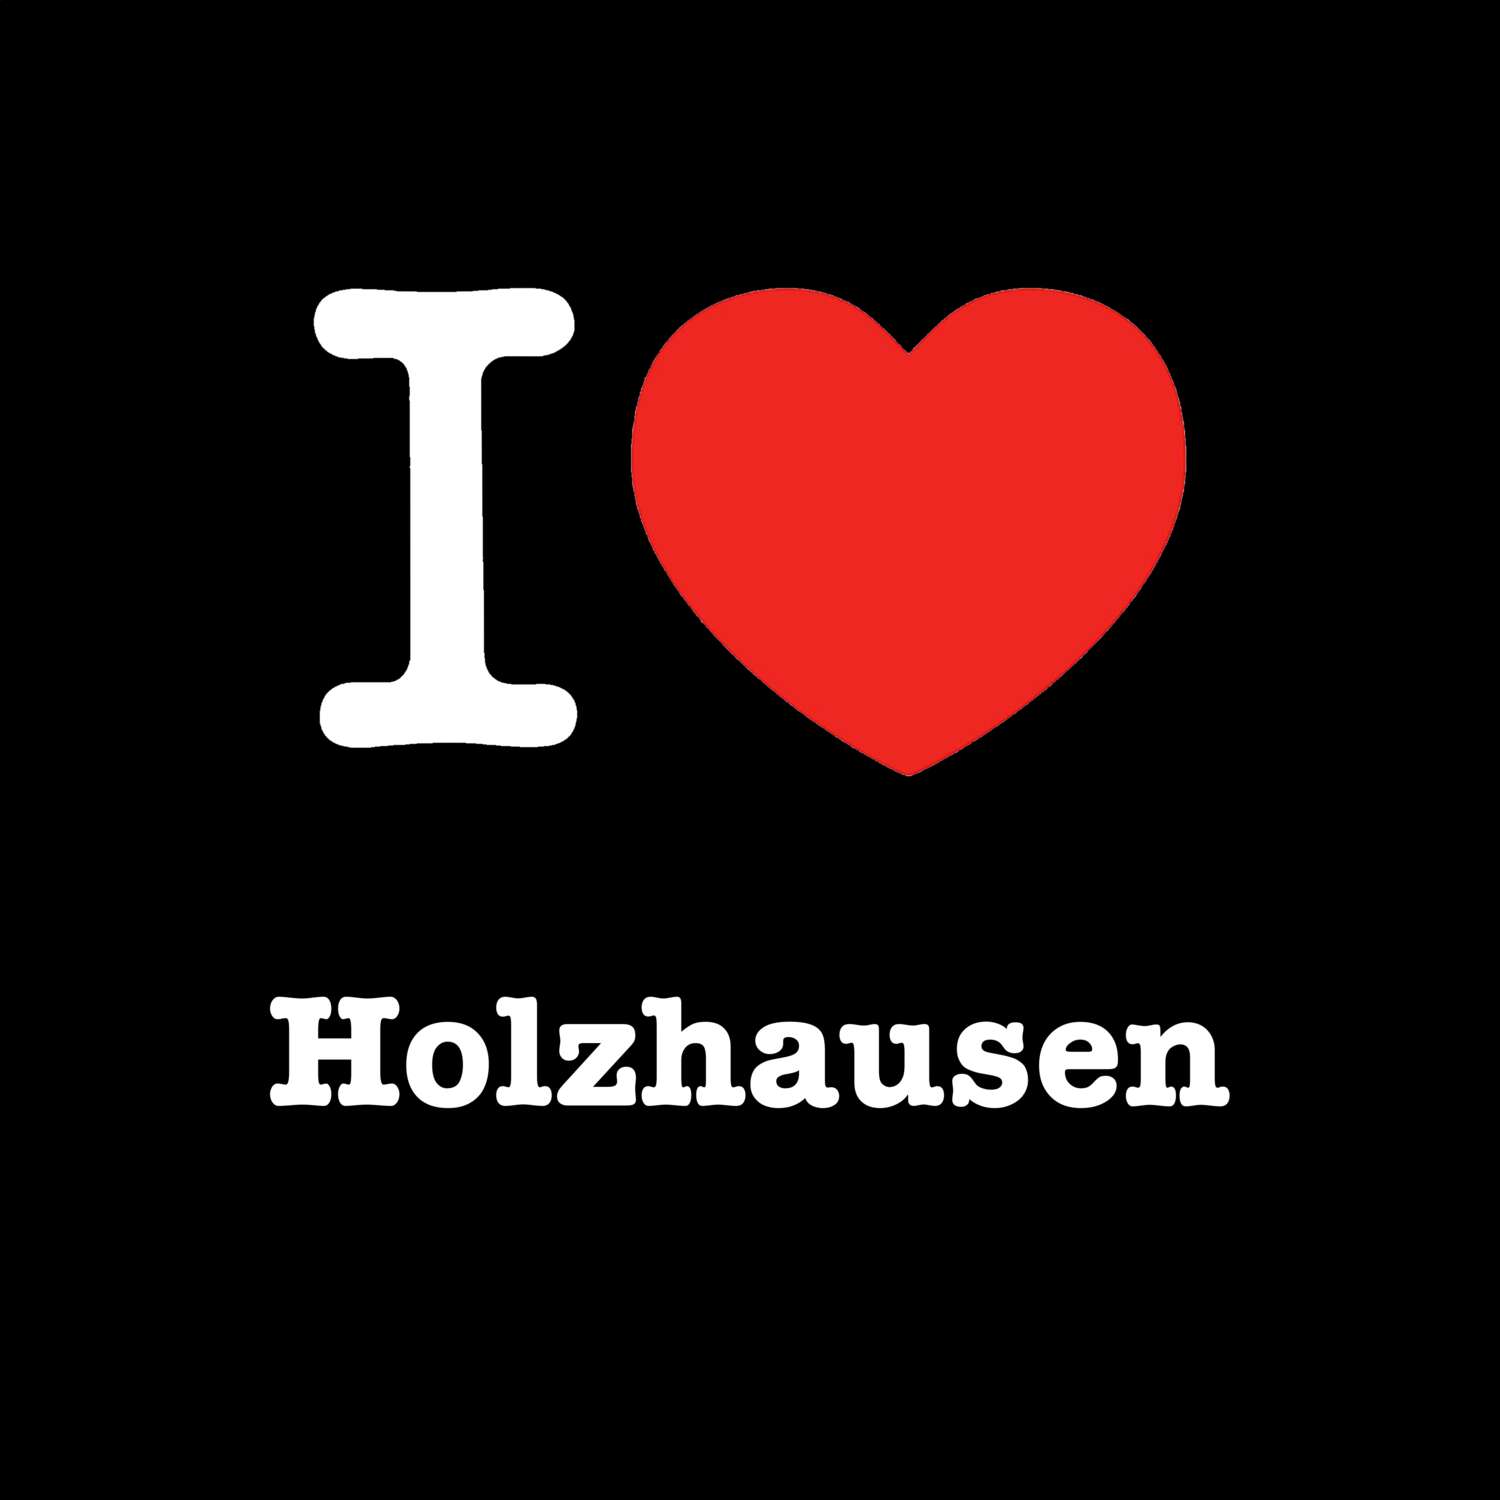 Holzhausen T-Shirt »I love«